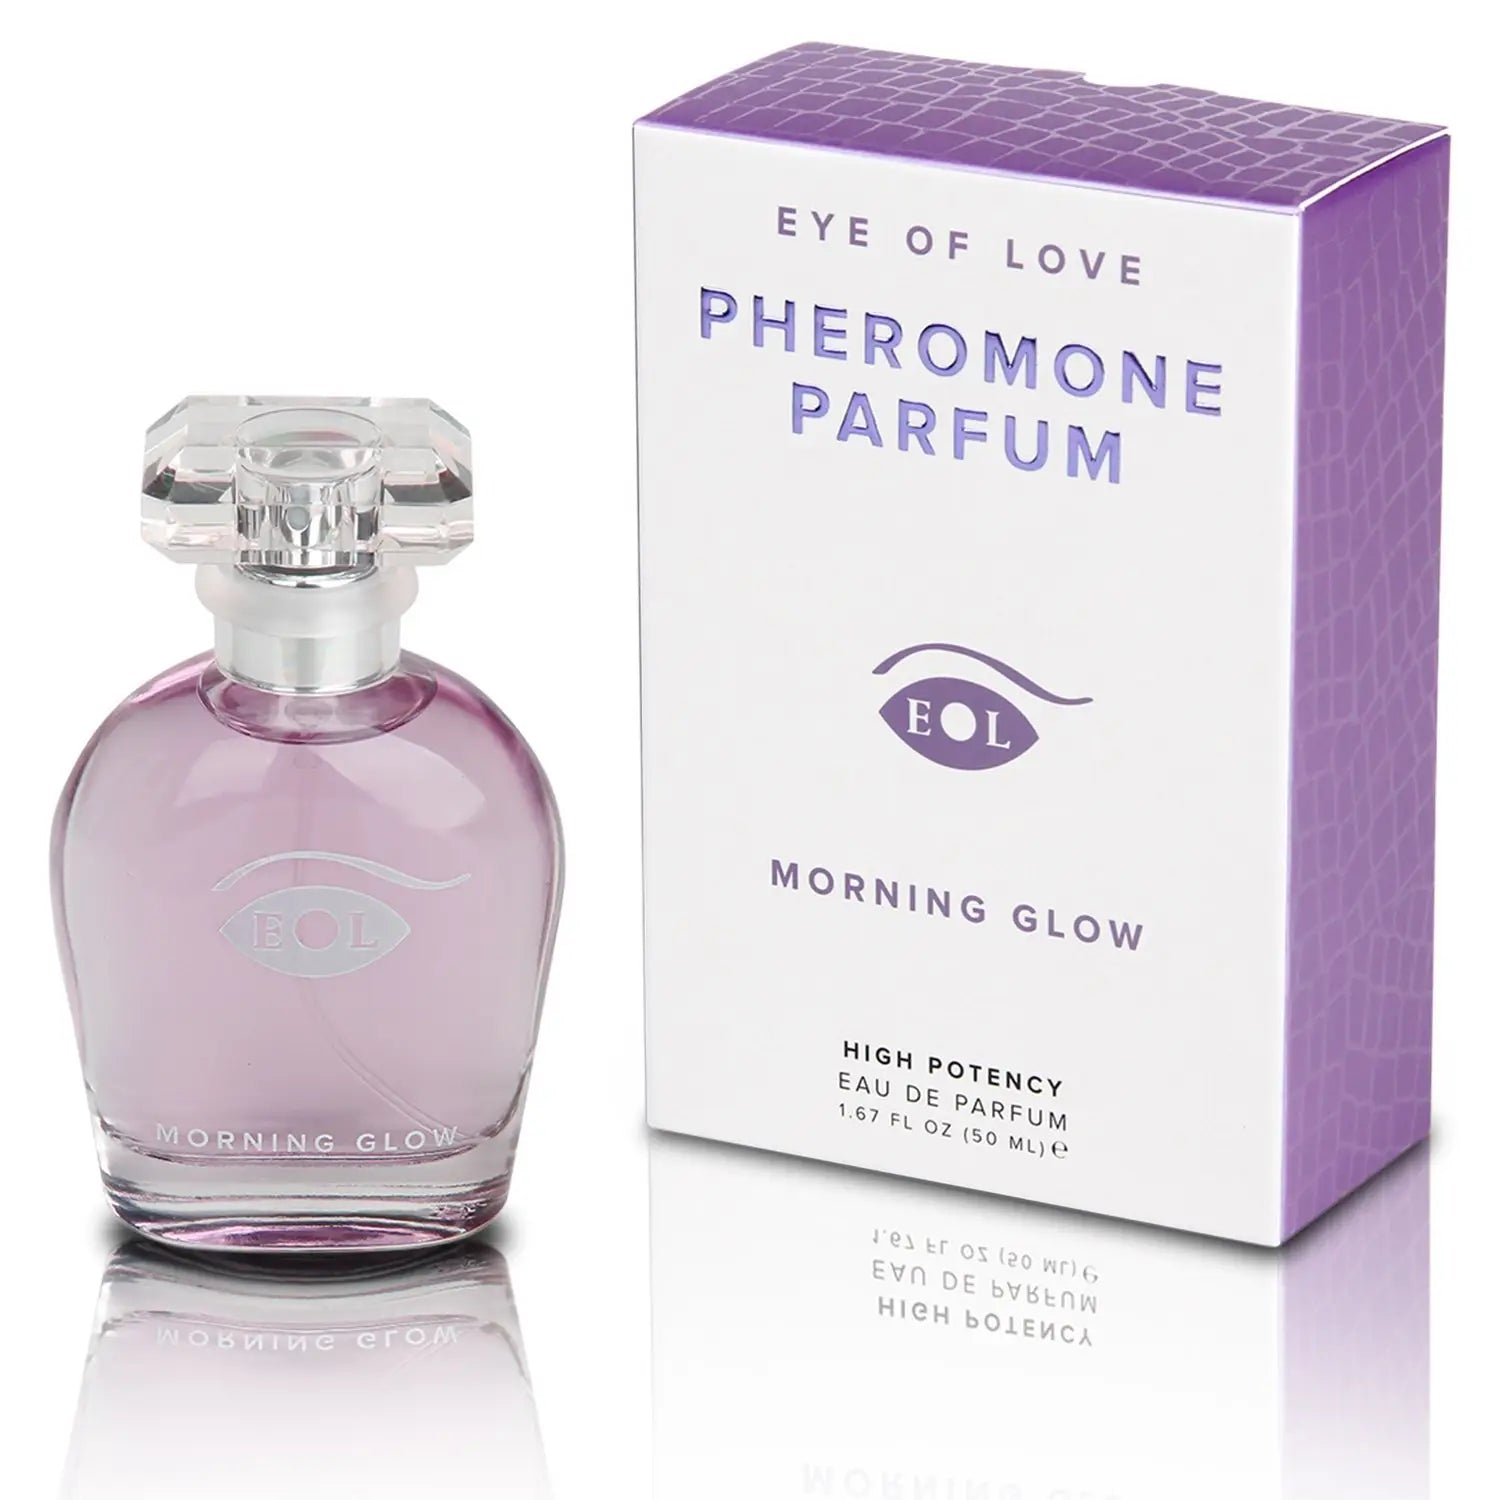 Morning Glow Pheromone Parfum - All sizes - Spellbound